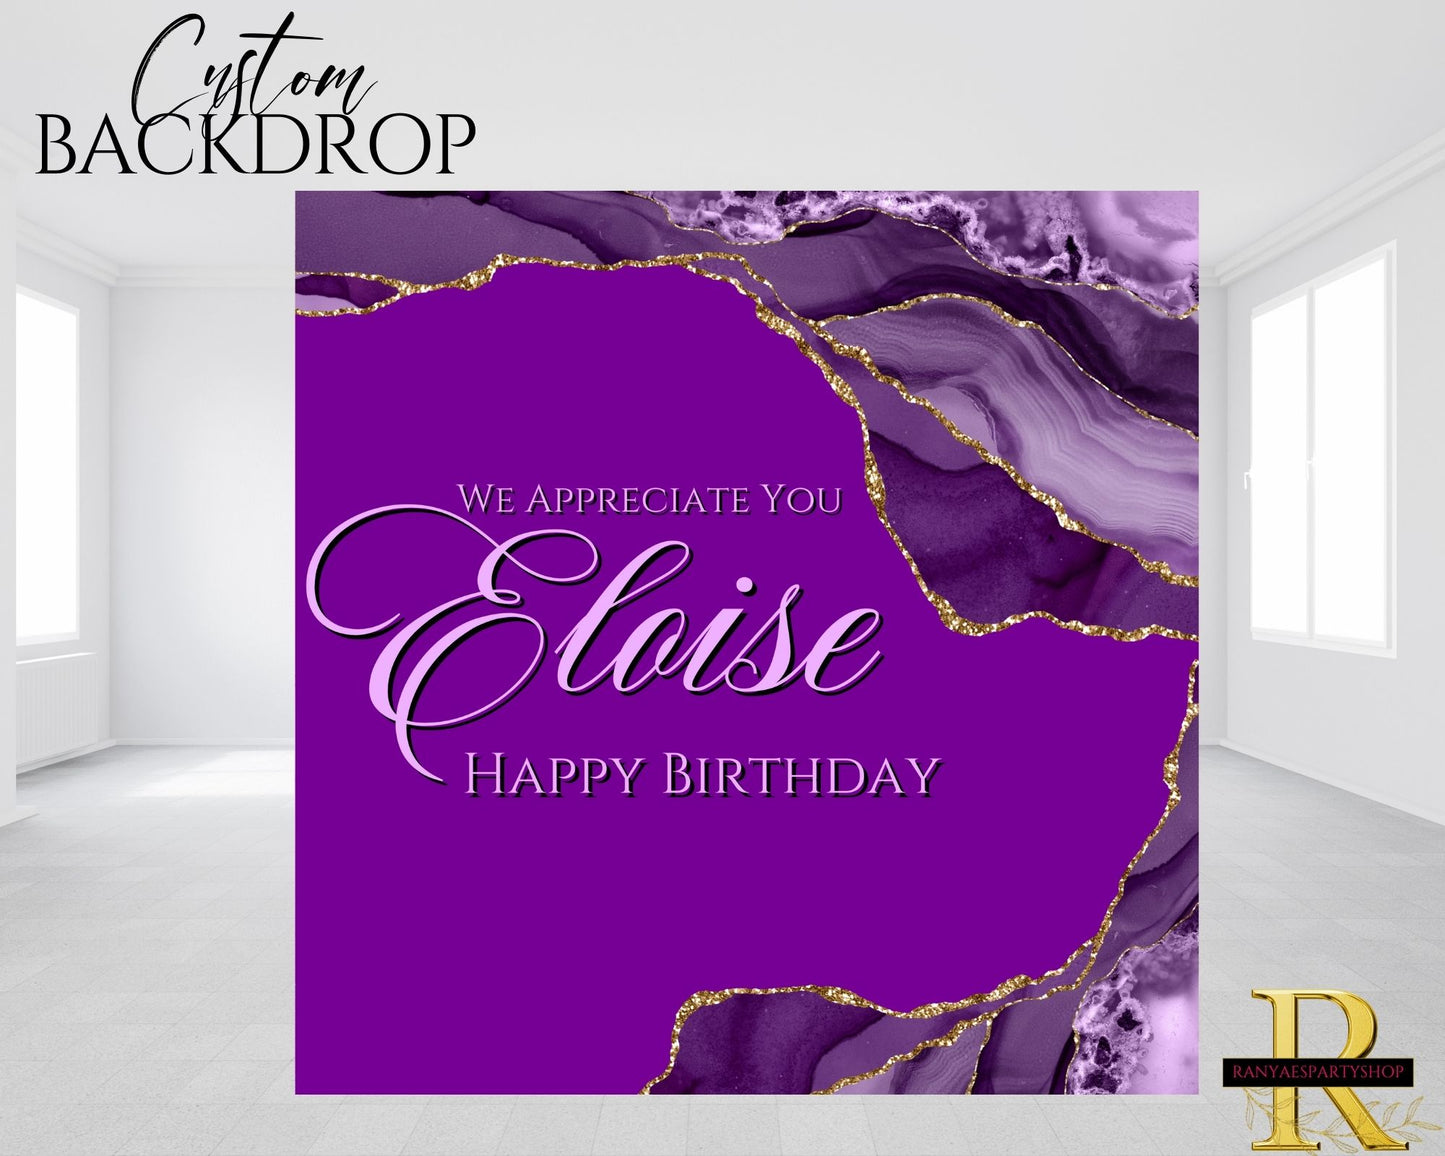 Shades of Purple Birthday Backdrop | Shades of Purple Birthday Party | Birthday Backdrop | Backdrops | Banners